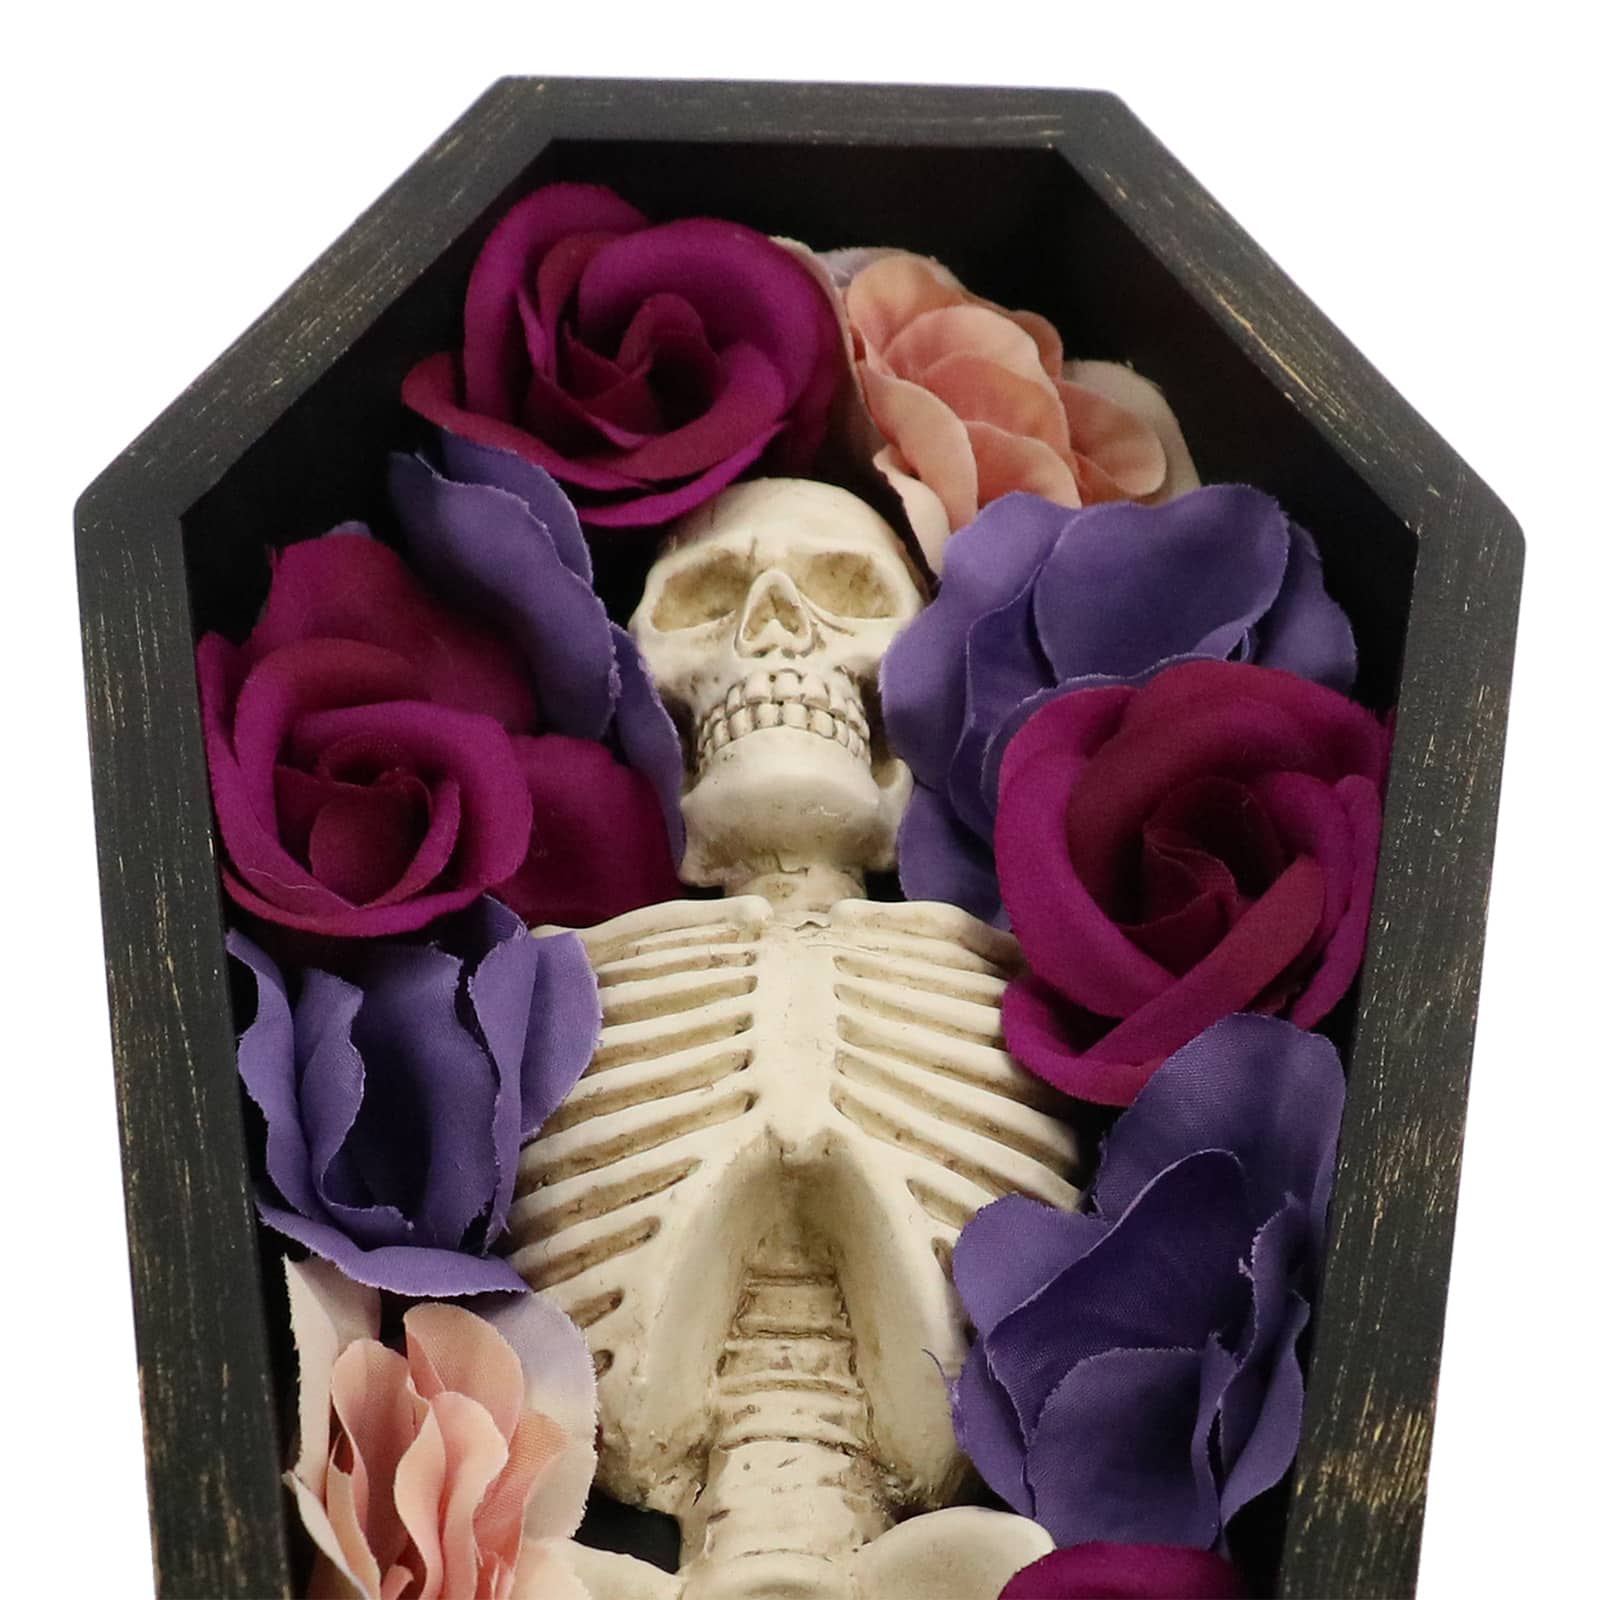 Grateful Dead T-Shirt  Woodcut Skeleton And Roses Grateful Dead Shirt